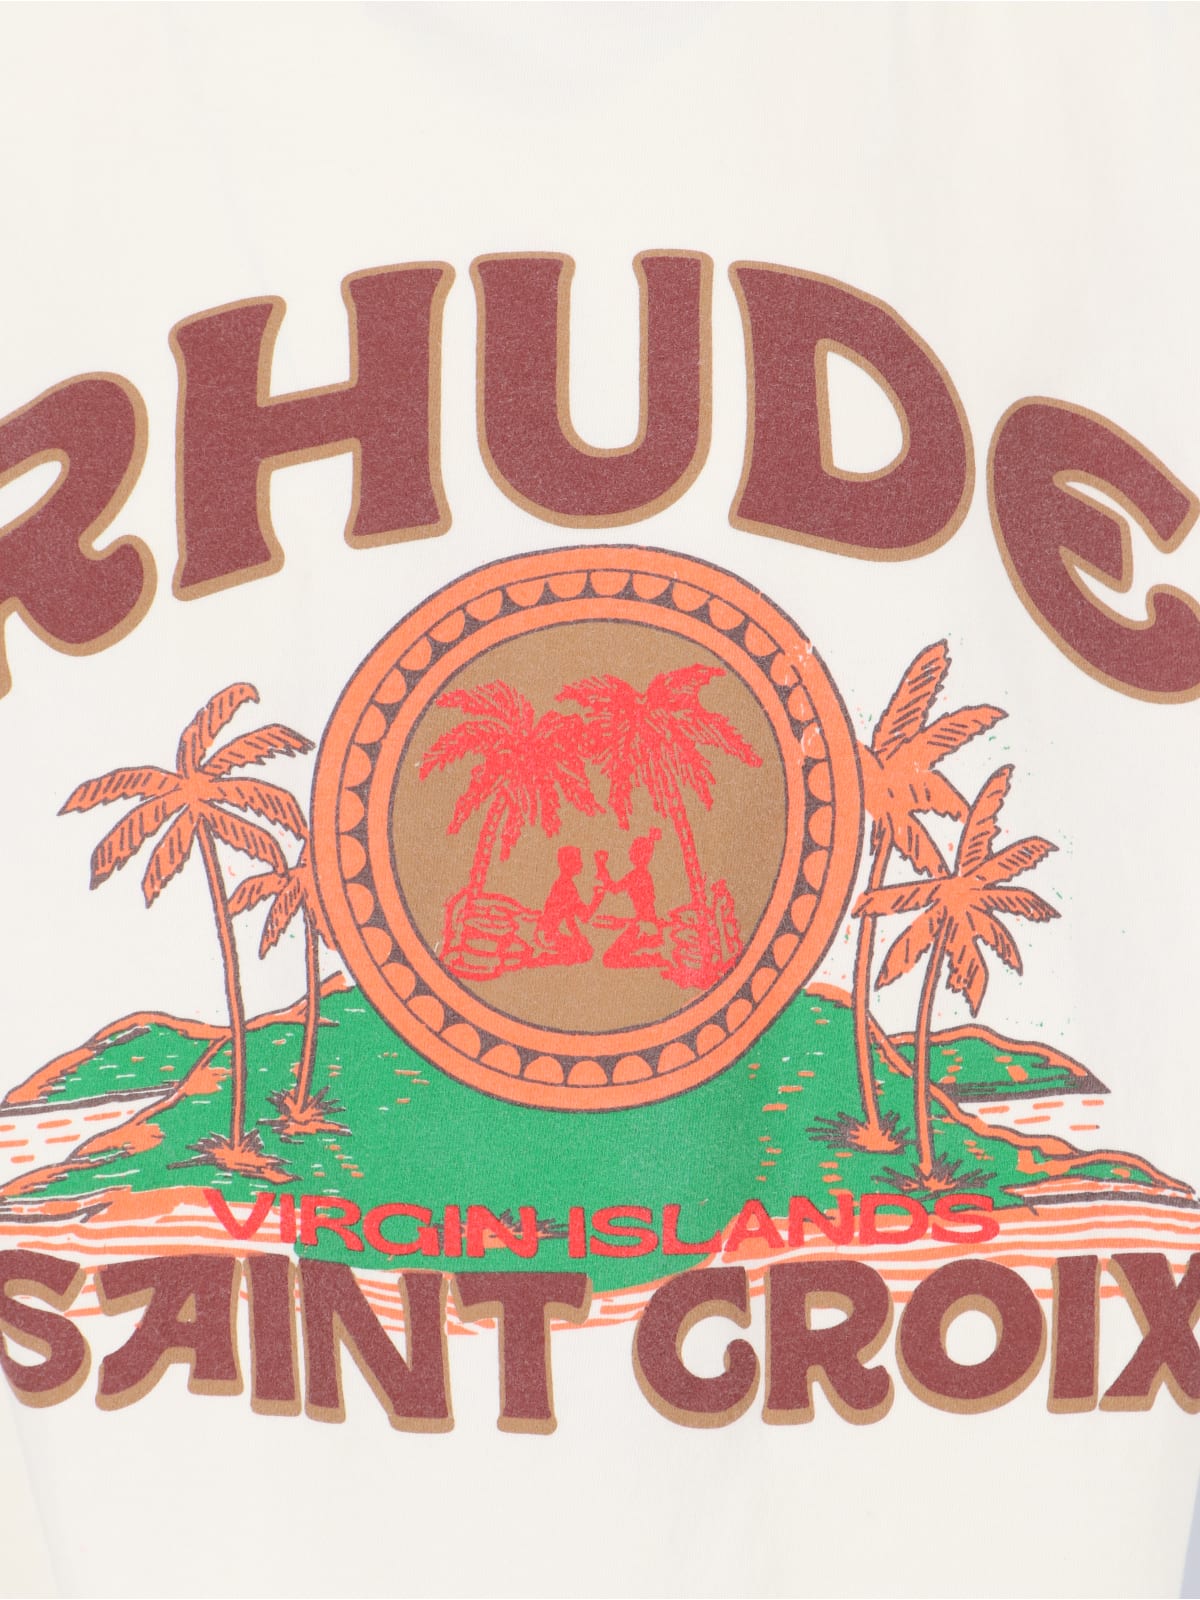 Shop Rhude Saint Groix T-shirt In Crema